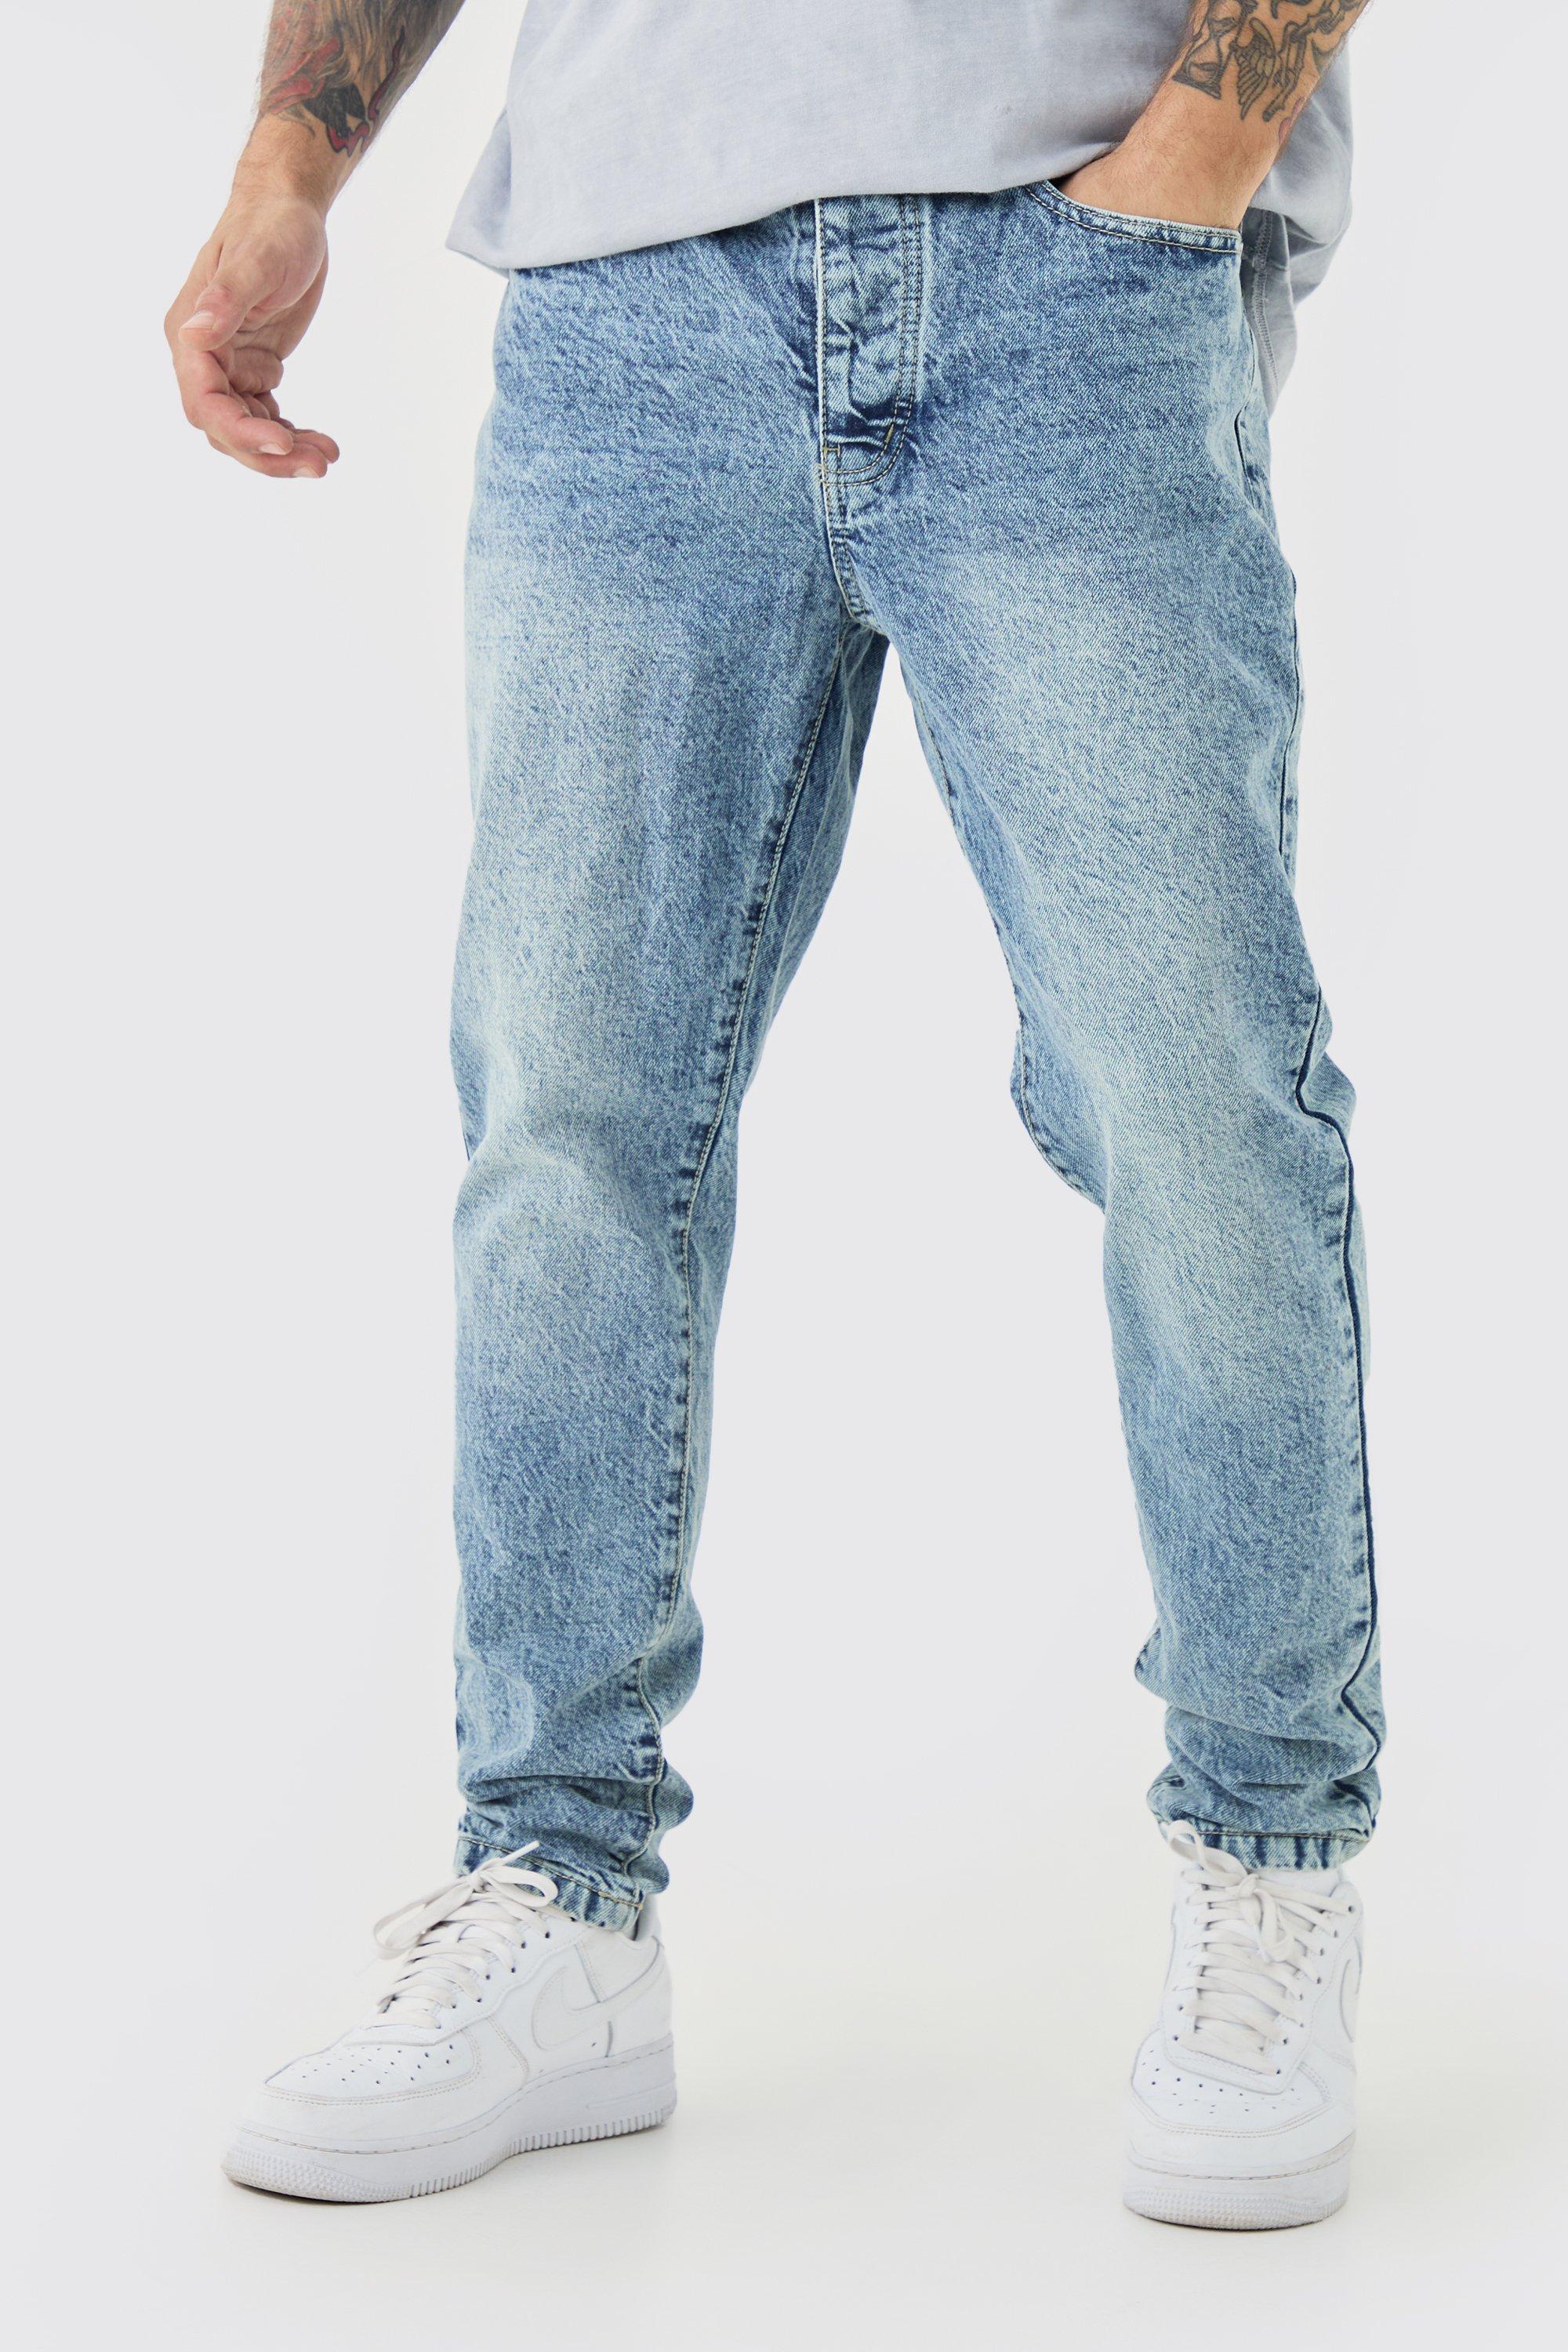 Jeans boohooMAN USA Fit Tapered | Rigid